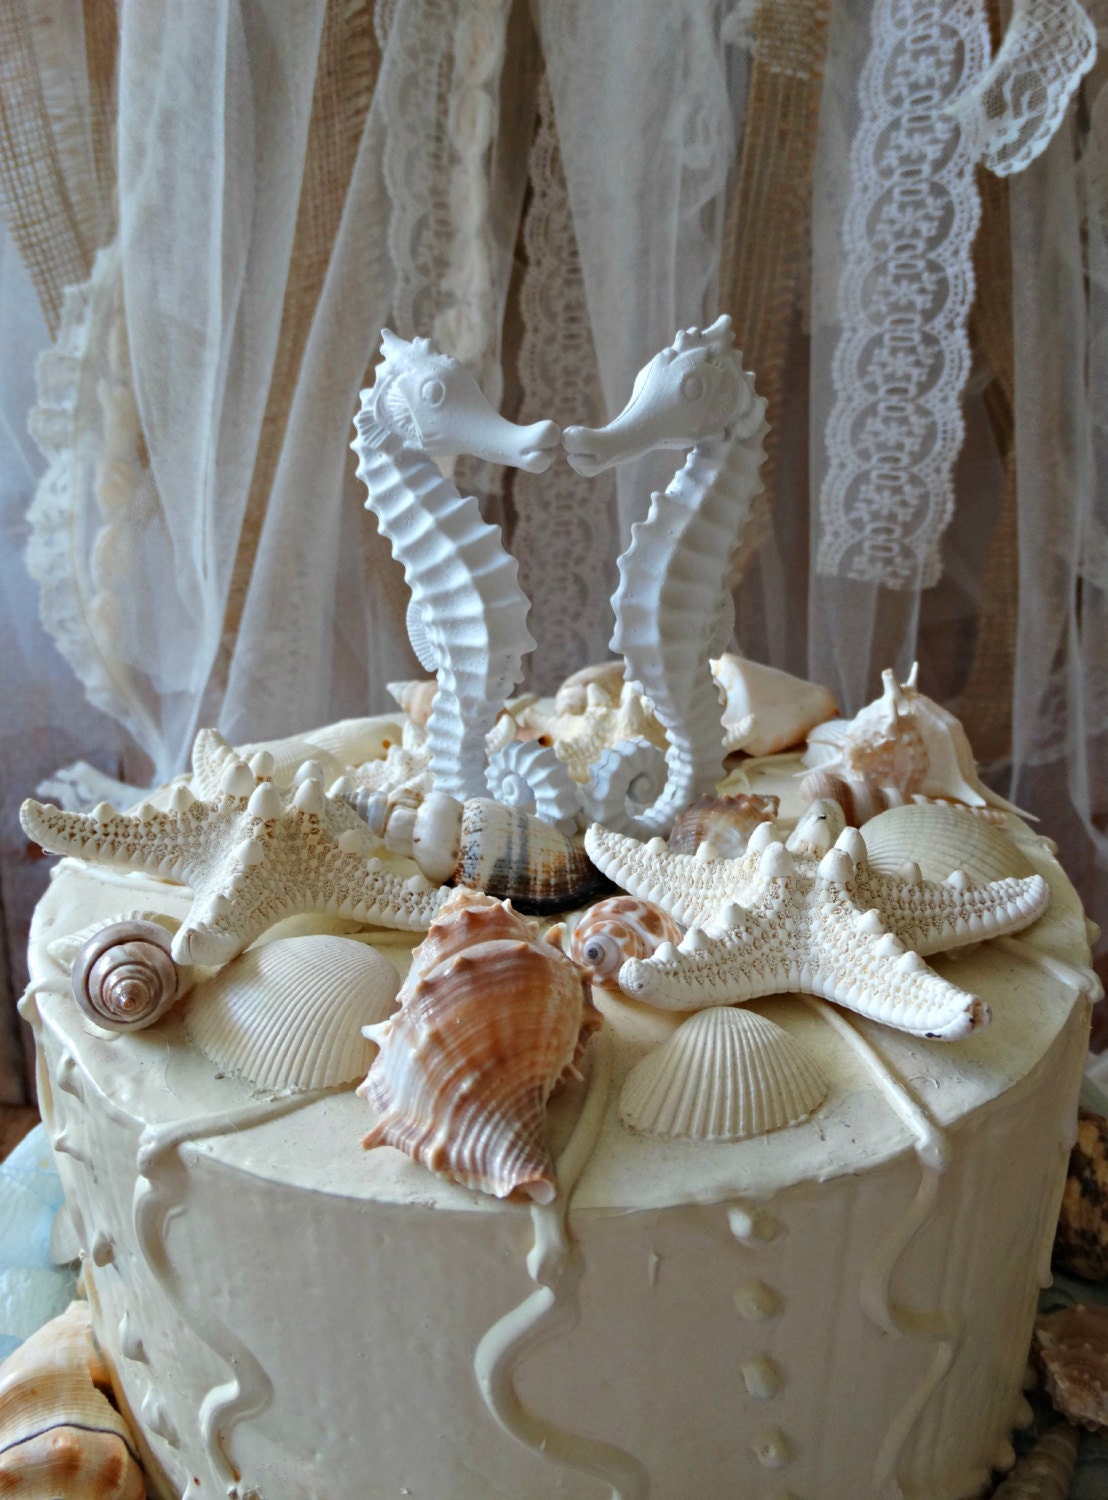 Acrylic Sea Horse Bride /& Groom Wedding Cake Topper Decoration.